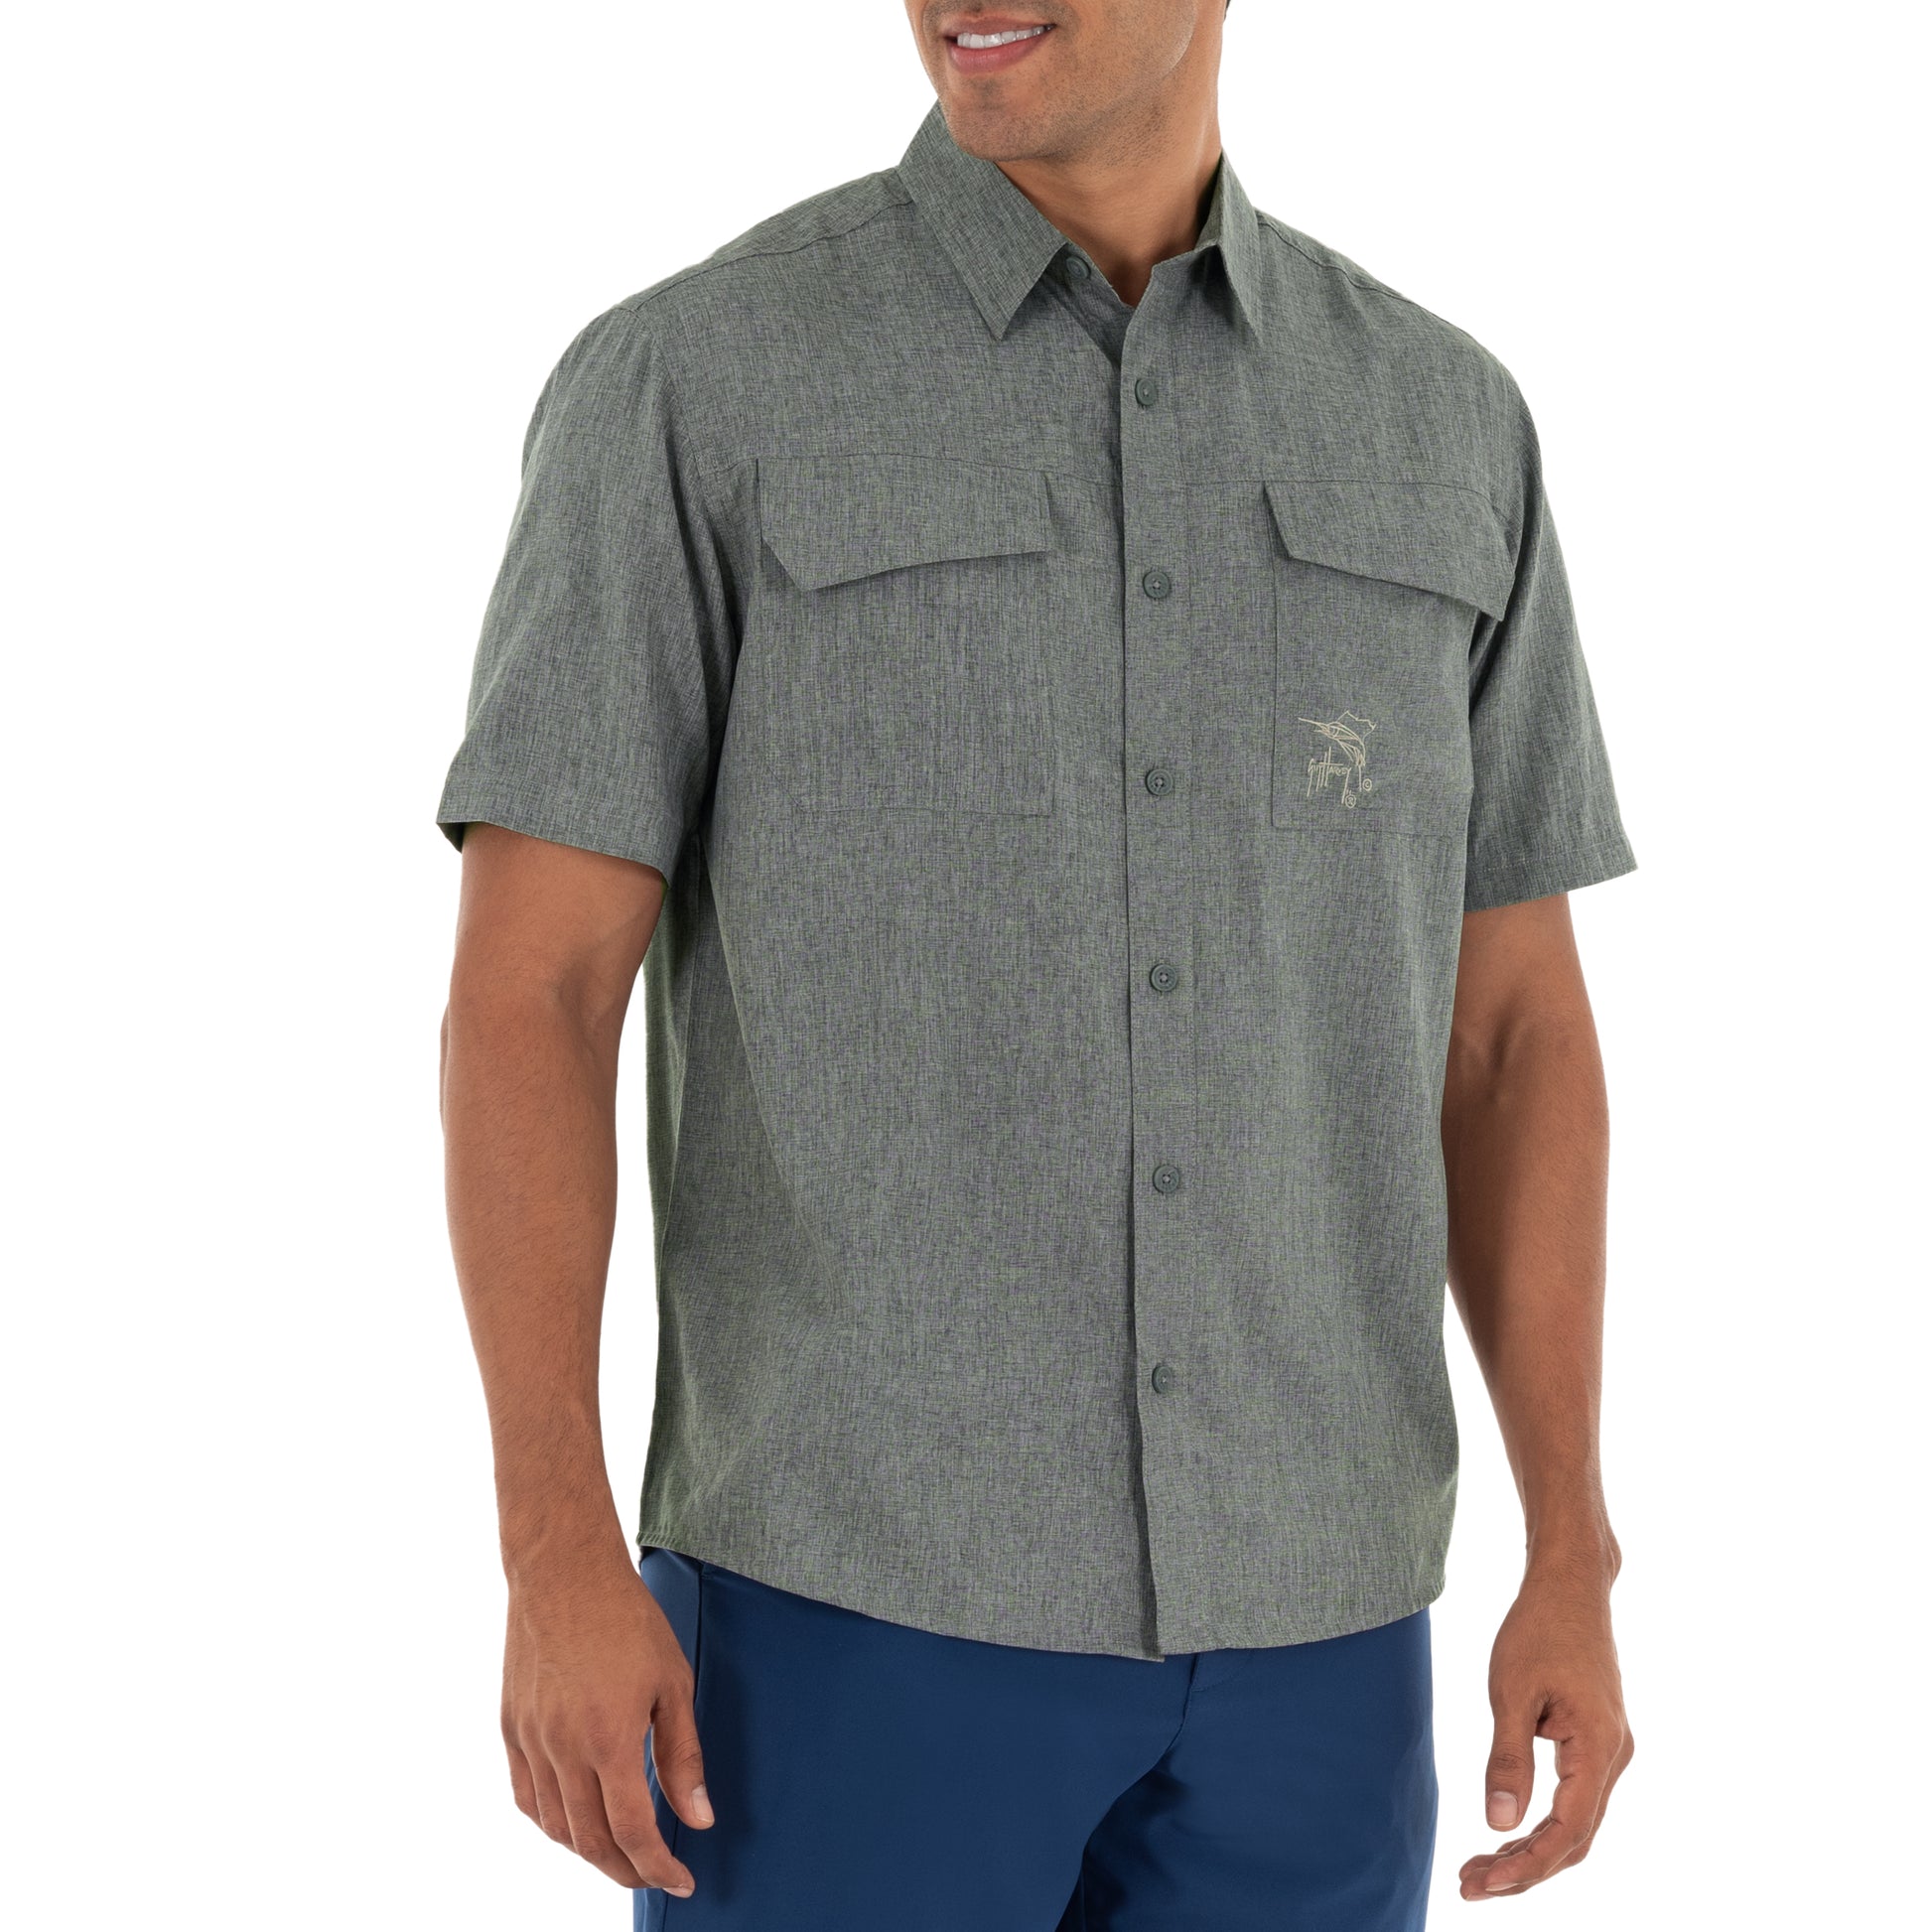 Men's Short Sleeve Heather Textured Cationic Grey Fishing Shirt View 4